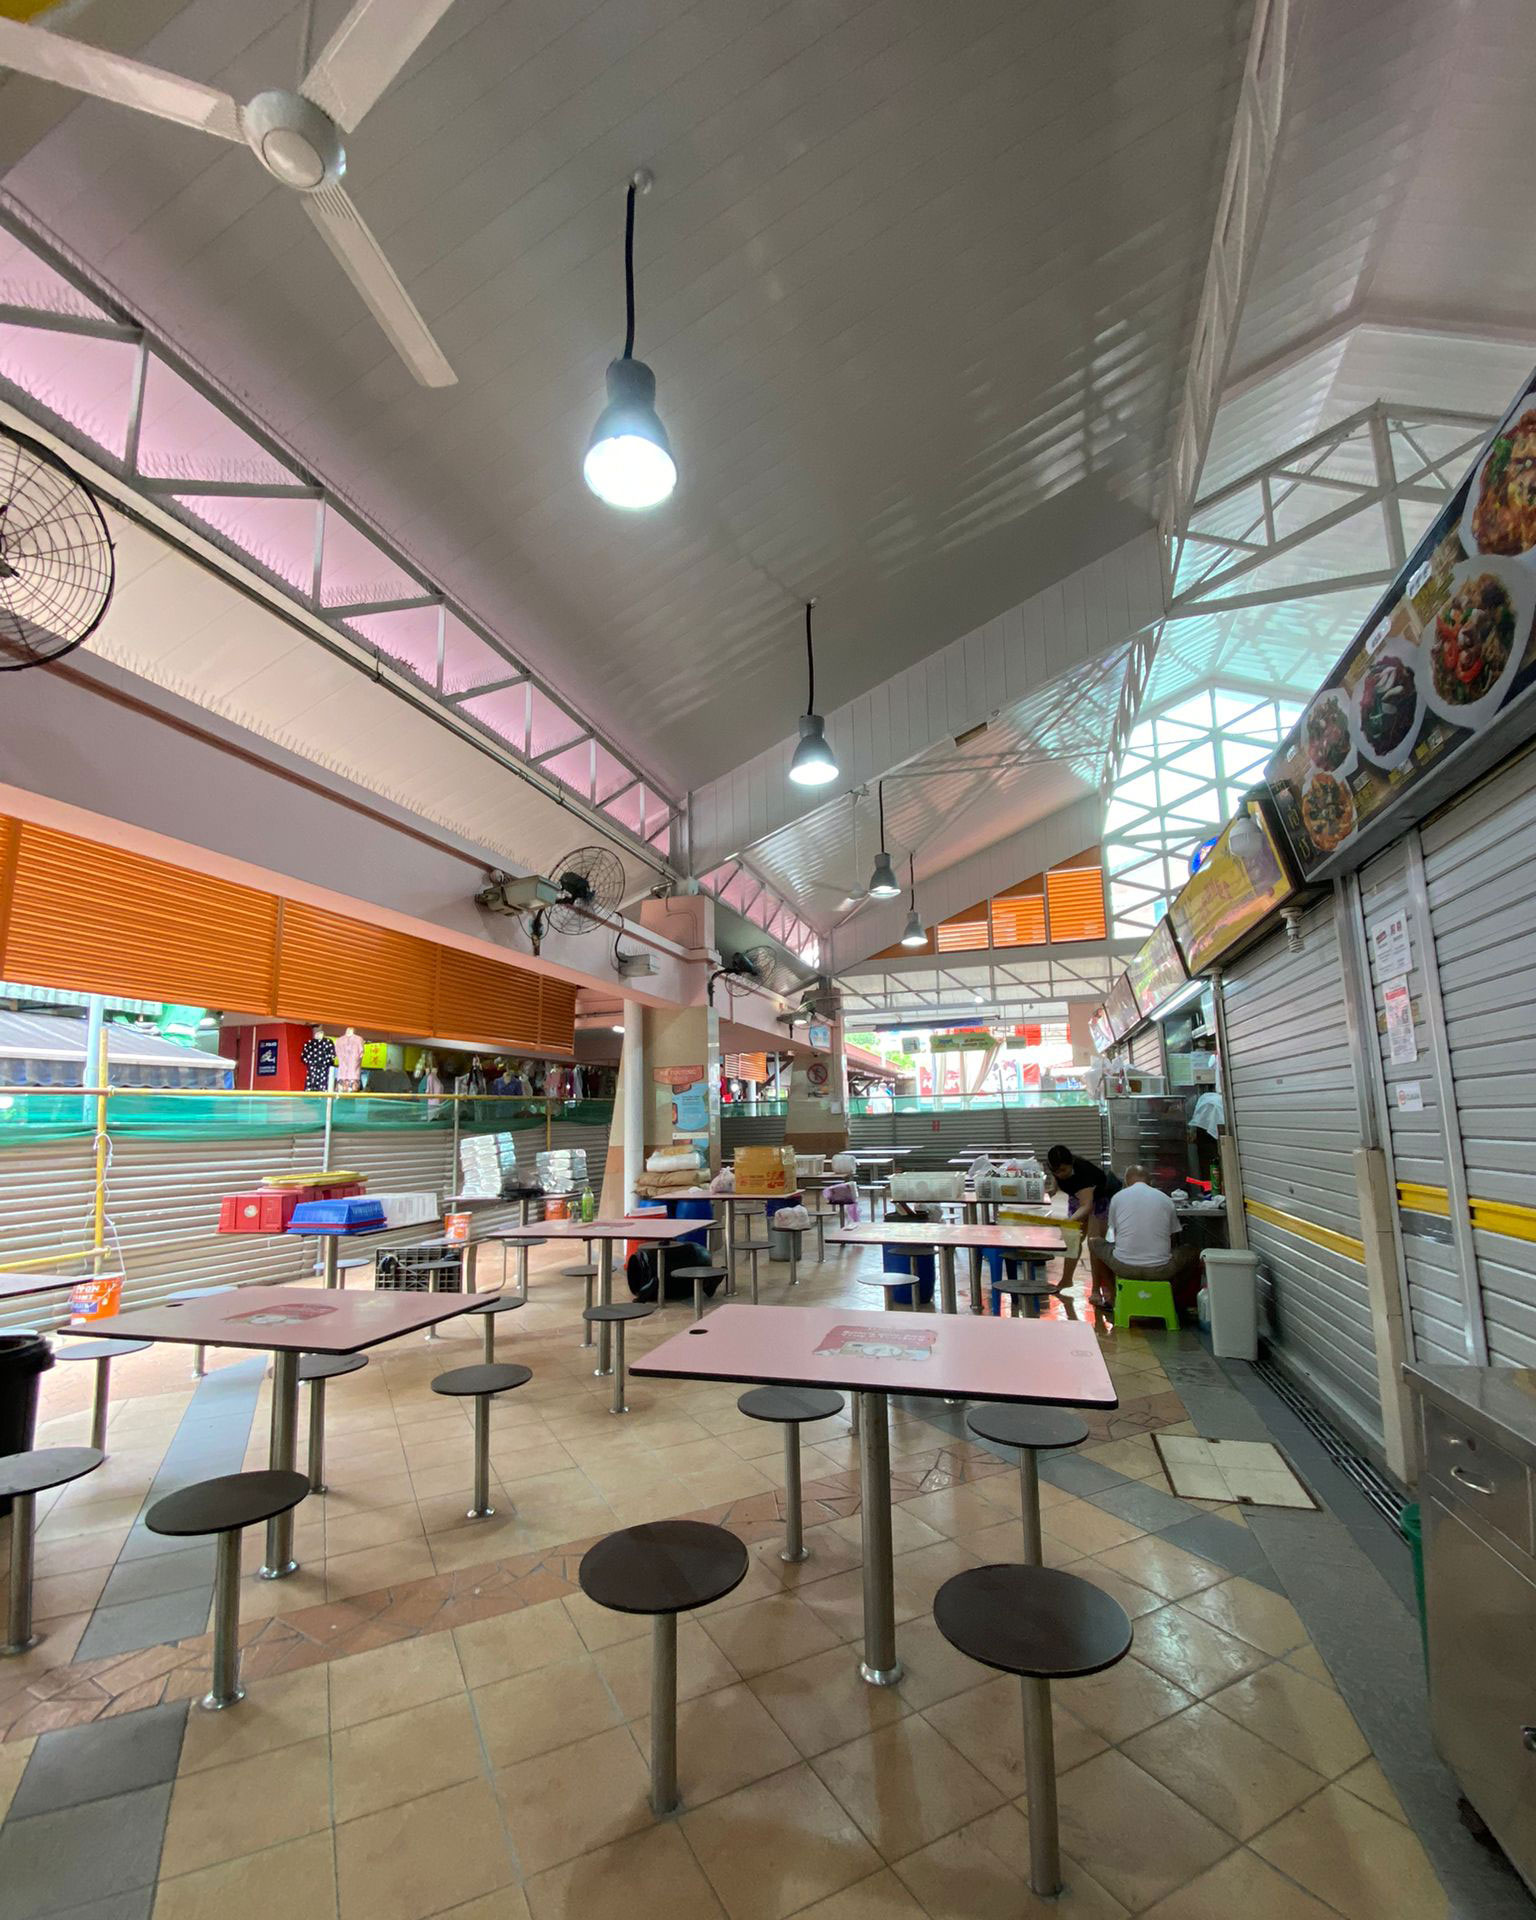 Chong Pang Food Centre reopens after repair work